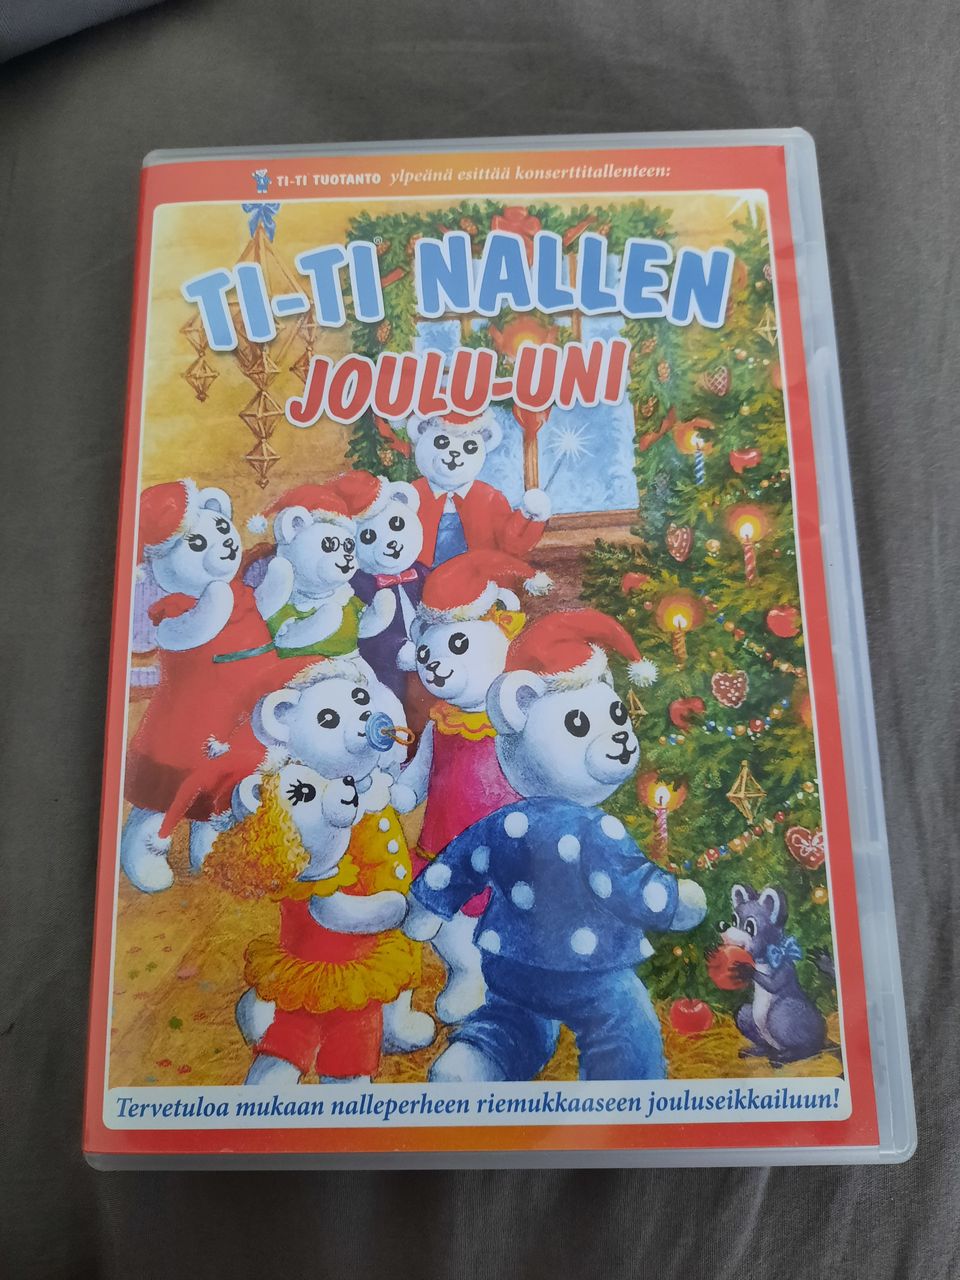 Nouda Seinäjoki, DVD Ti-ti nalle joulu-uni